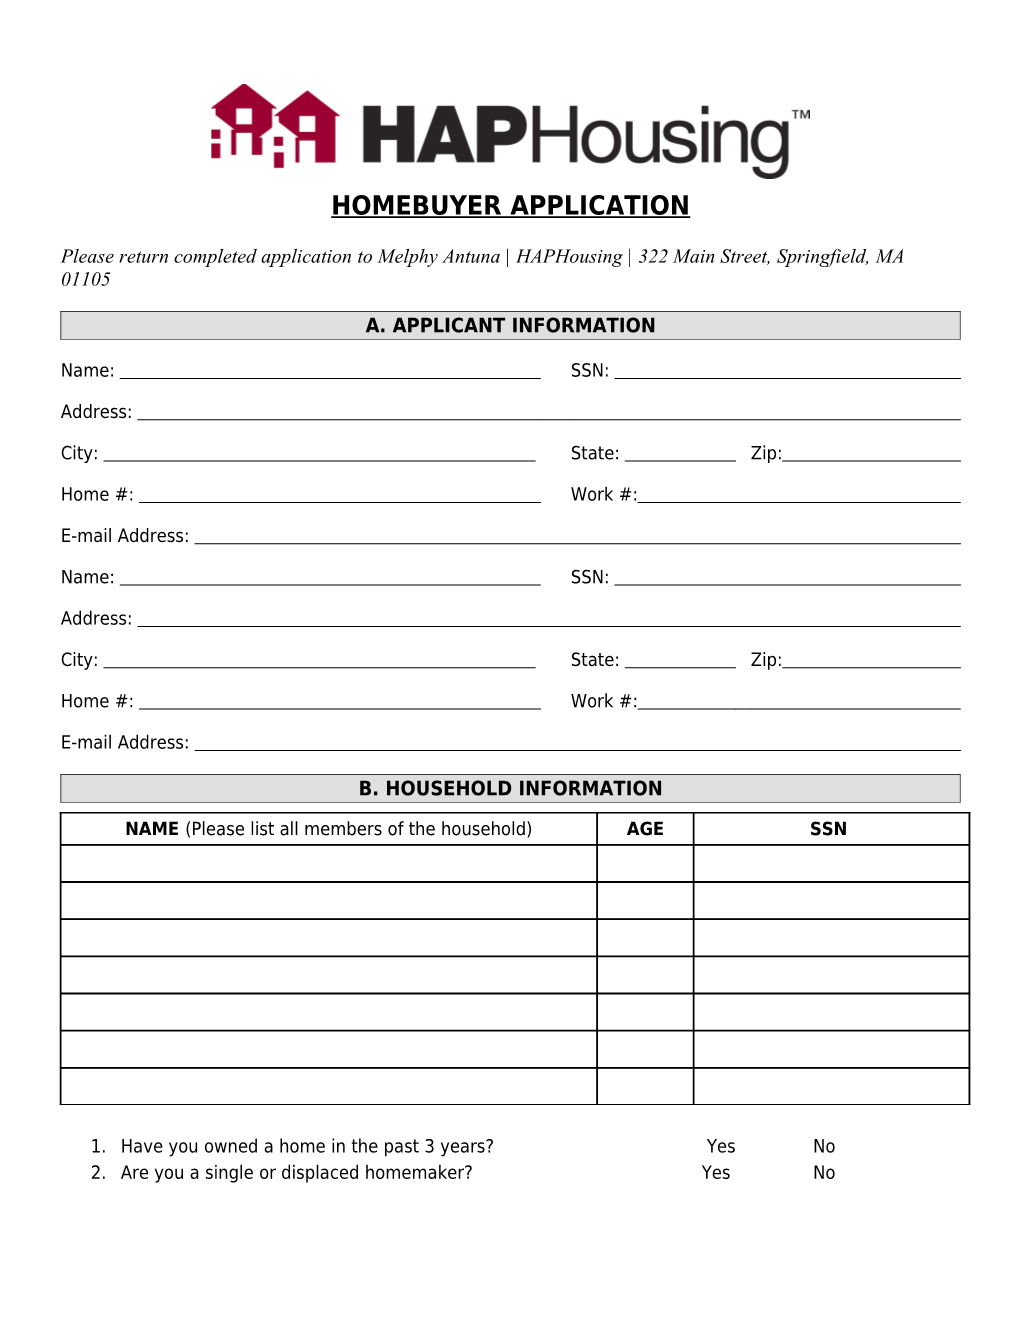 Homebuyer Application